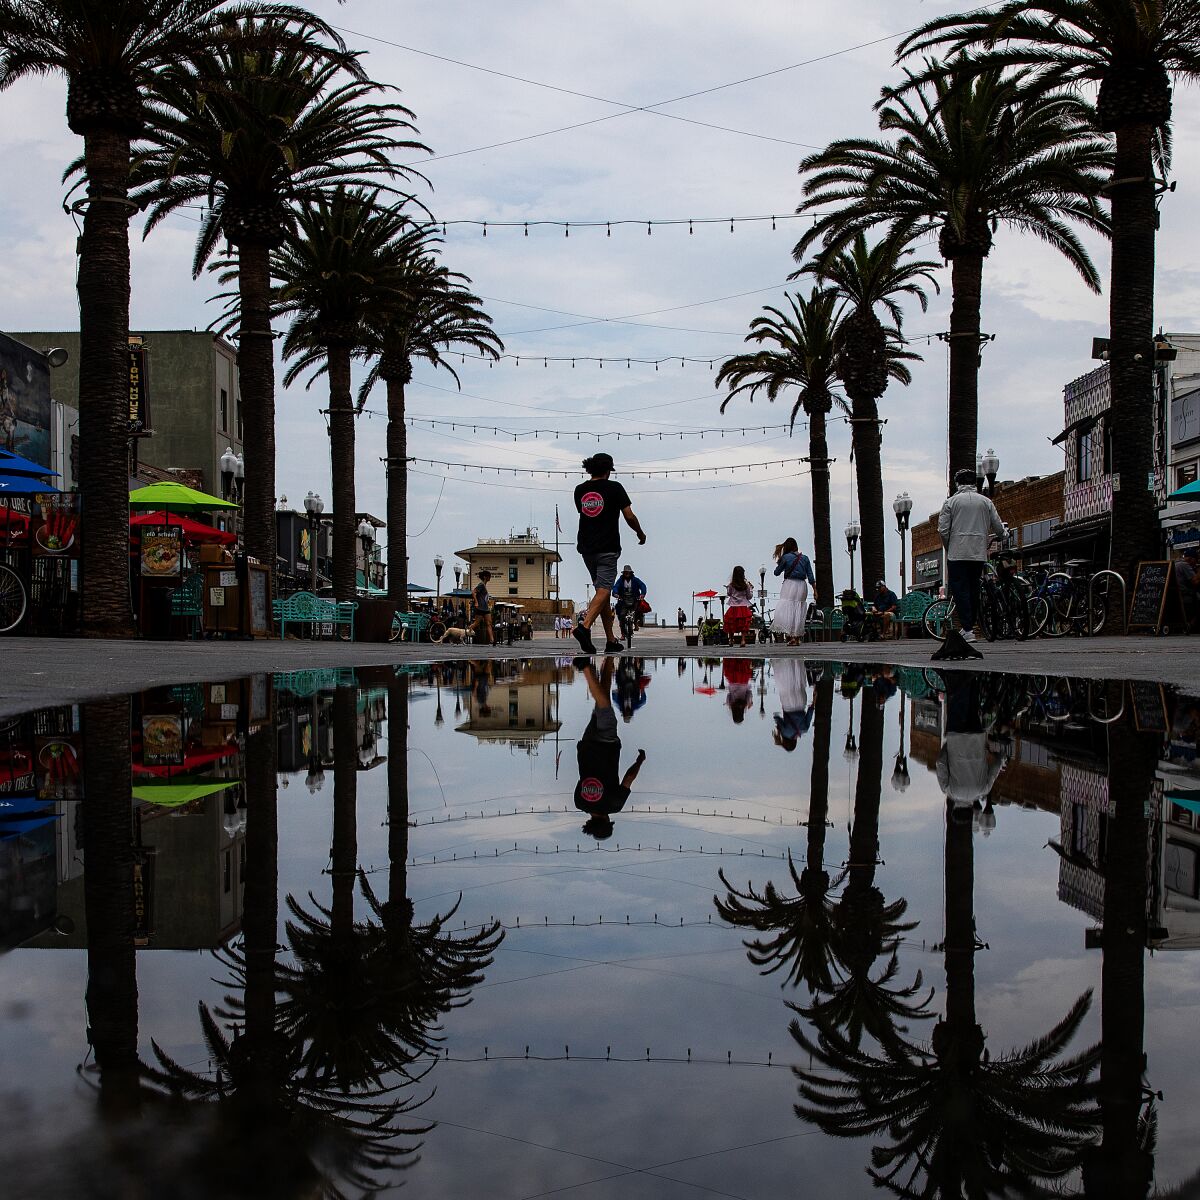 A rain puddle on a sidewalk in Huntington Beach.